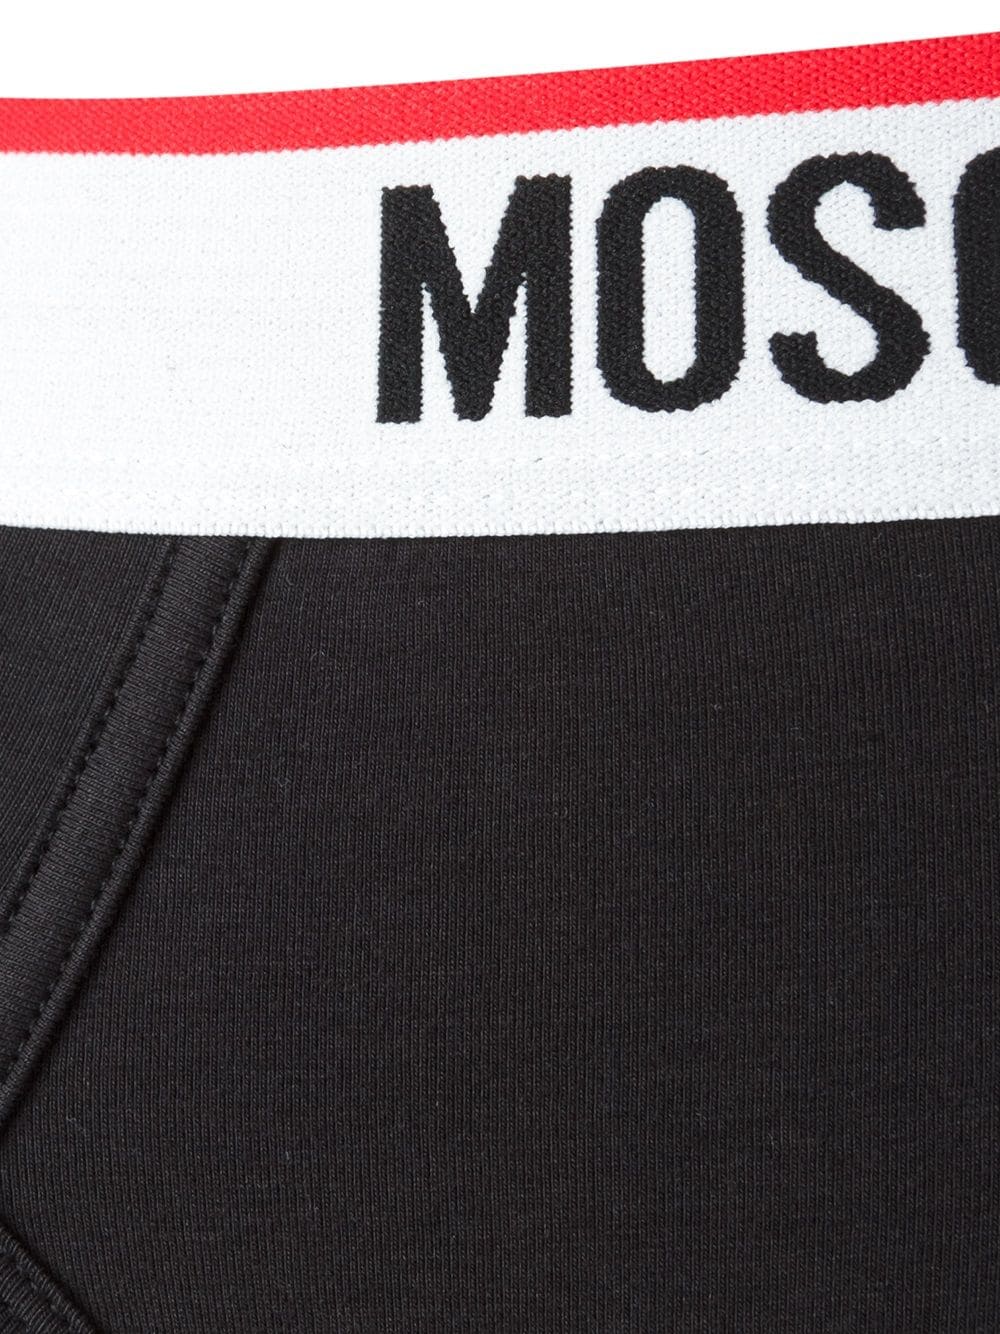 Moschino Black Logo Briefs Bi-Pack